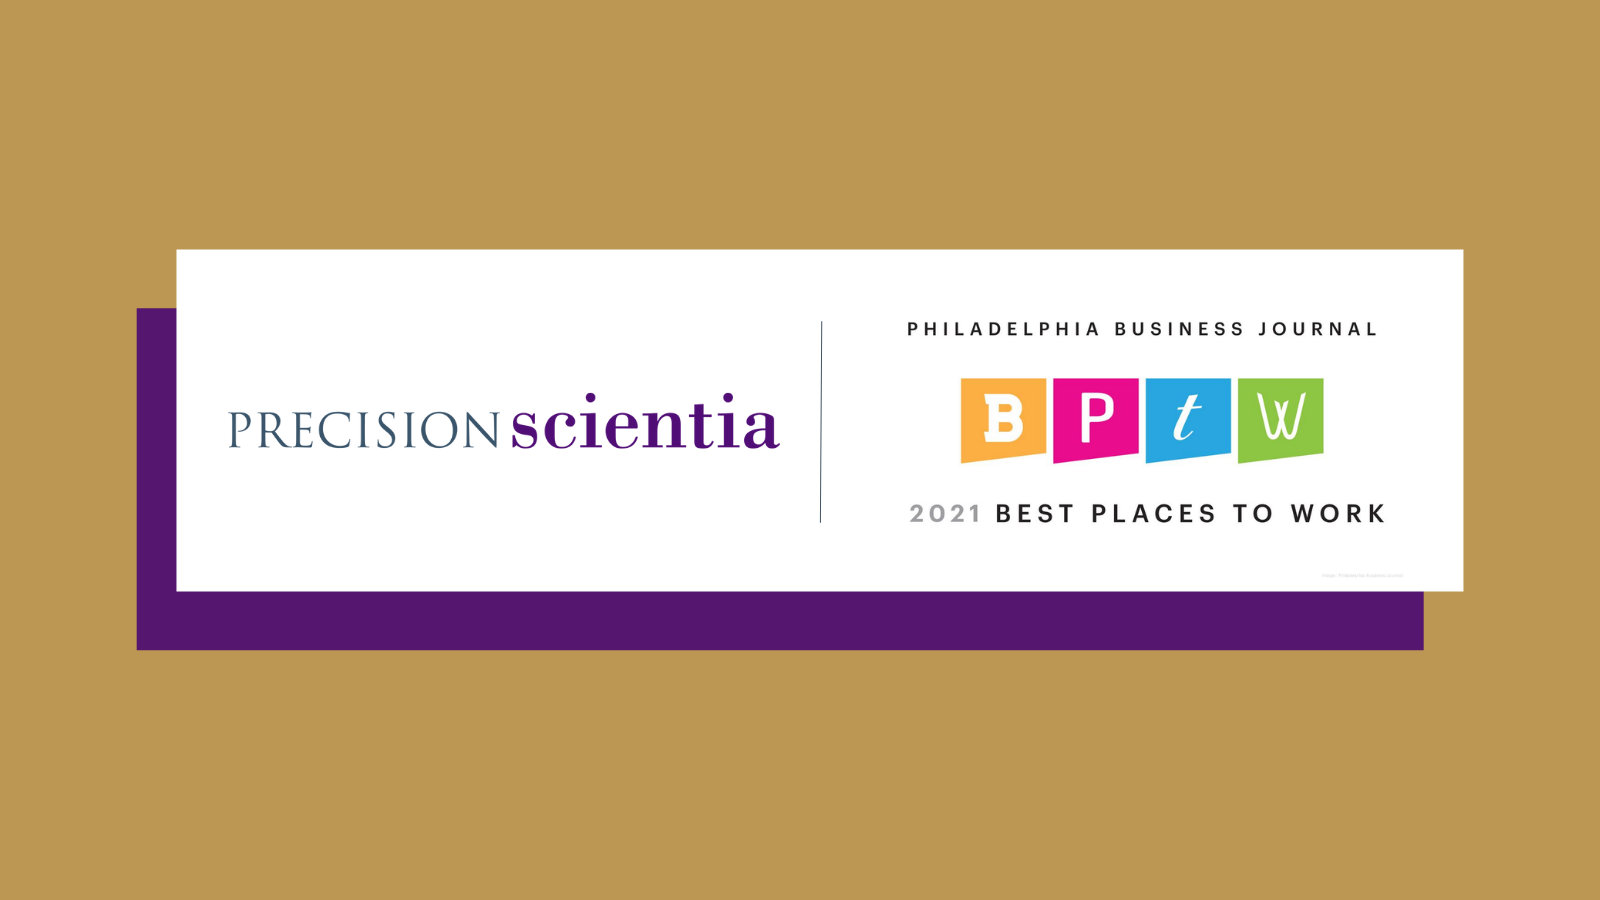 PRECISIONscientia Best Place to Work 2021 - Philadelphia Business Journal